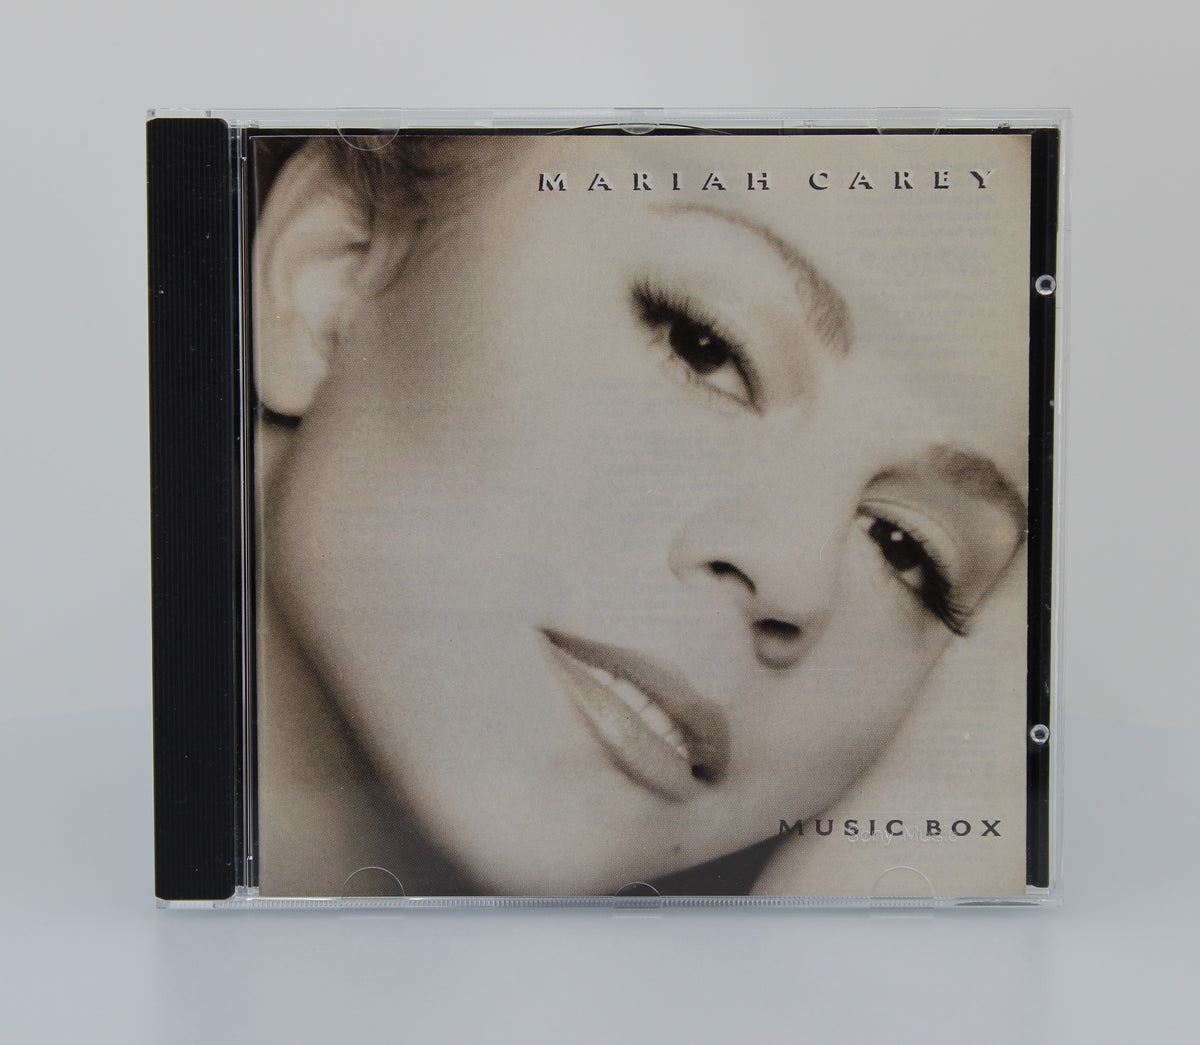 Mariah Carey – Music Box, CD Album + CD Single Special Edition, Spain 1995 (CD 616)